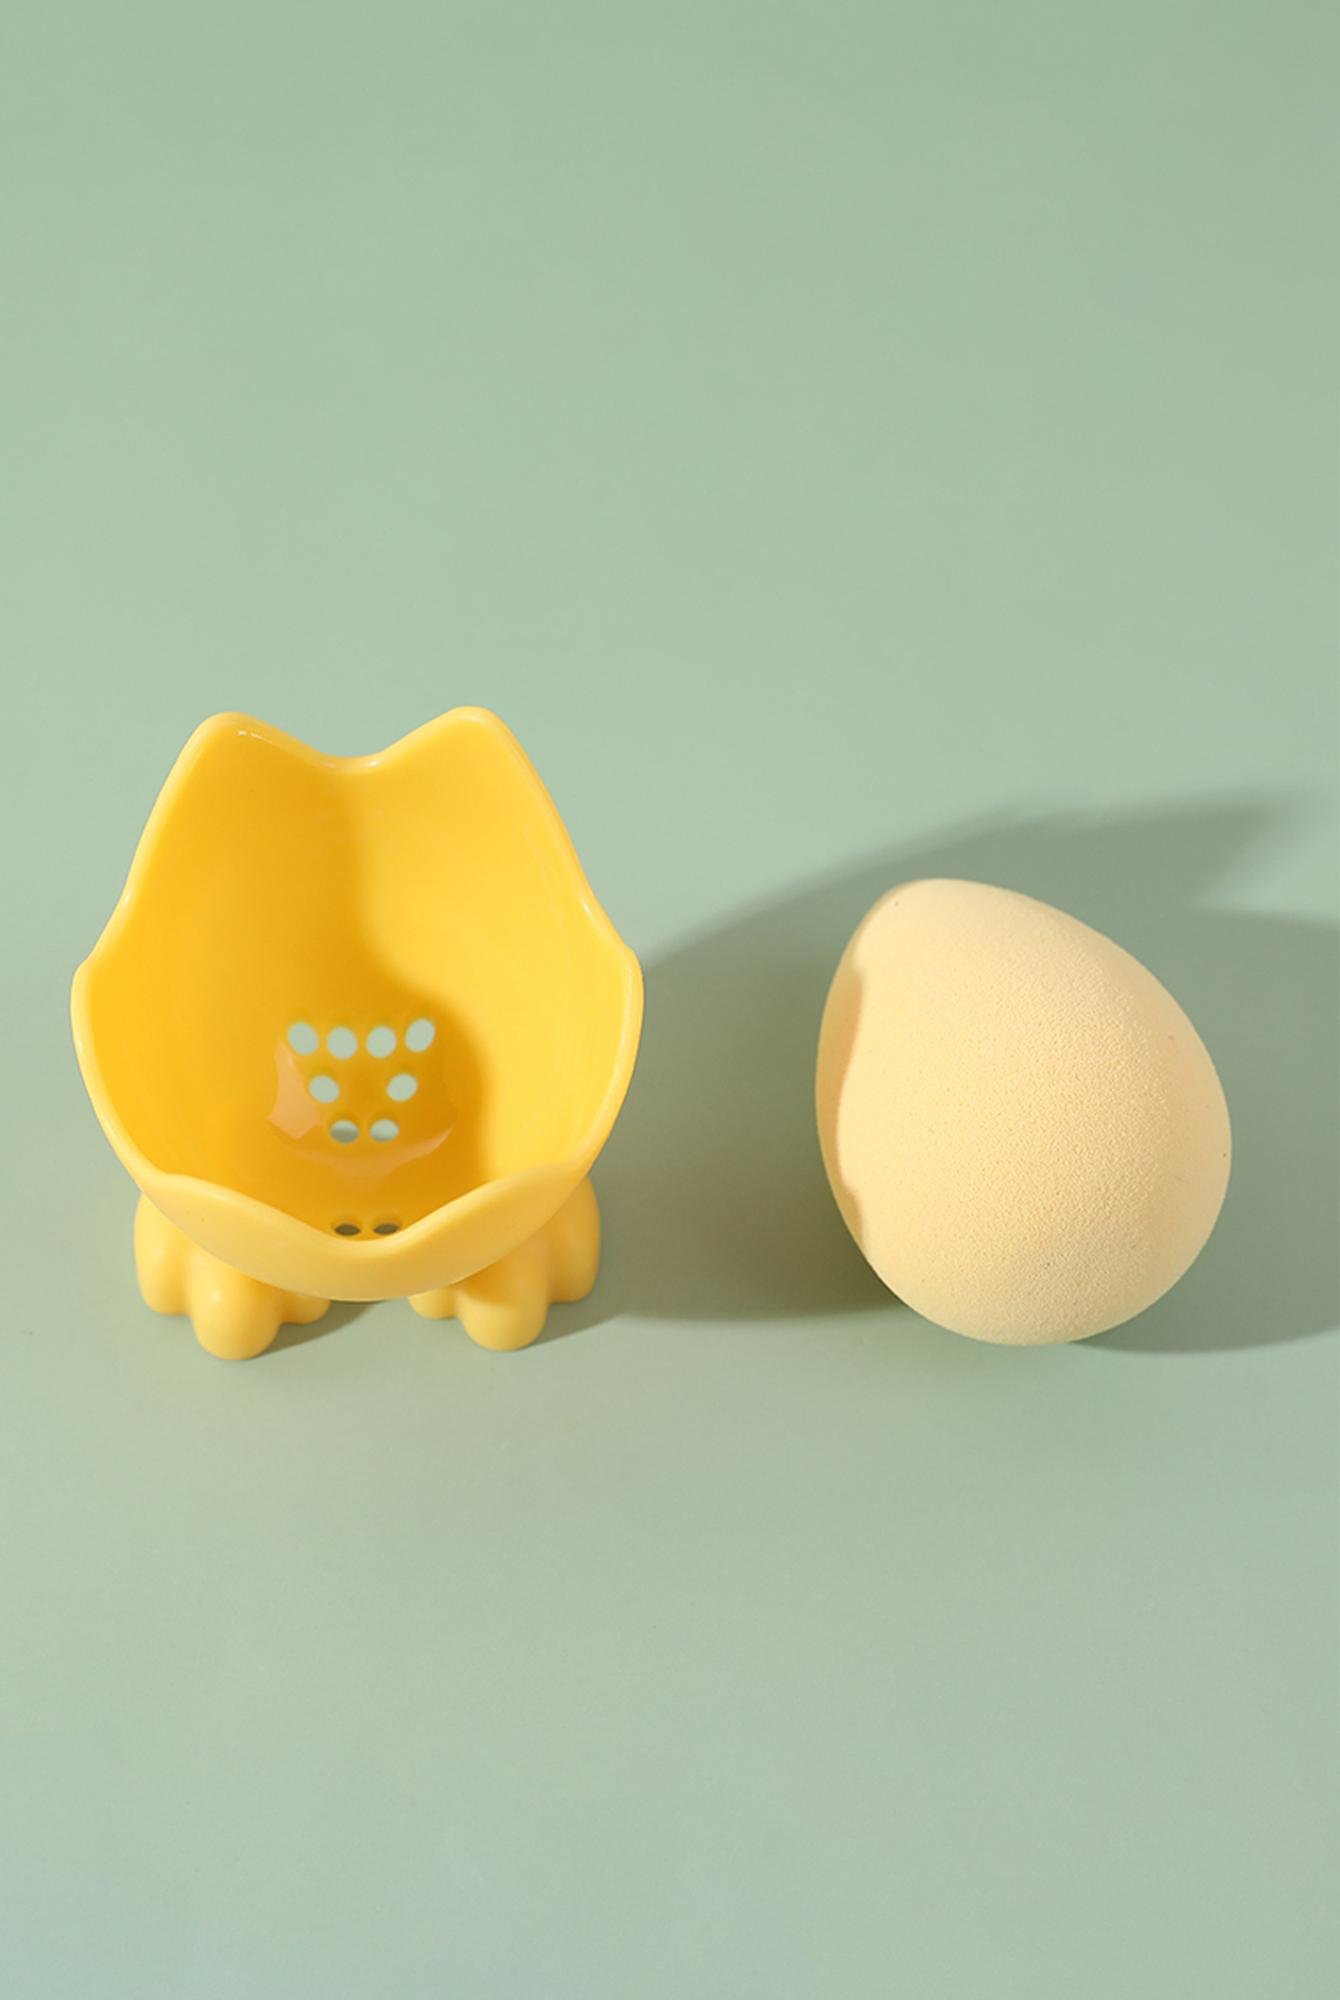  Yoyoso Yumurta Kabuğu Makyaj Süngeri Sarı